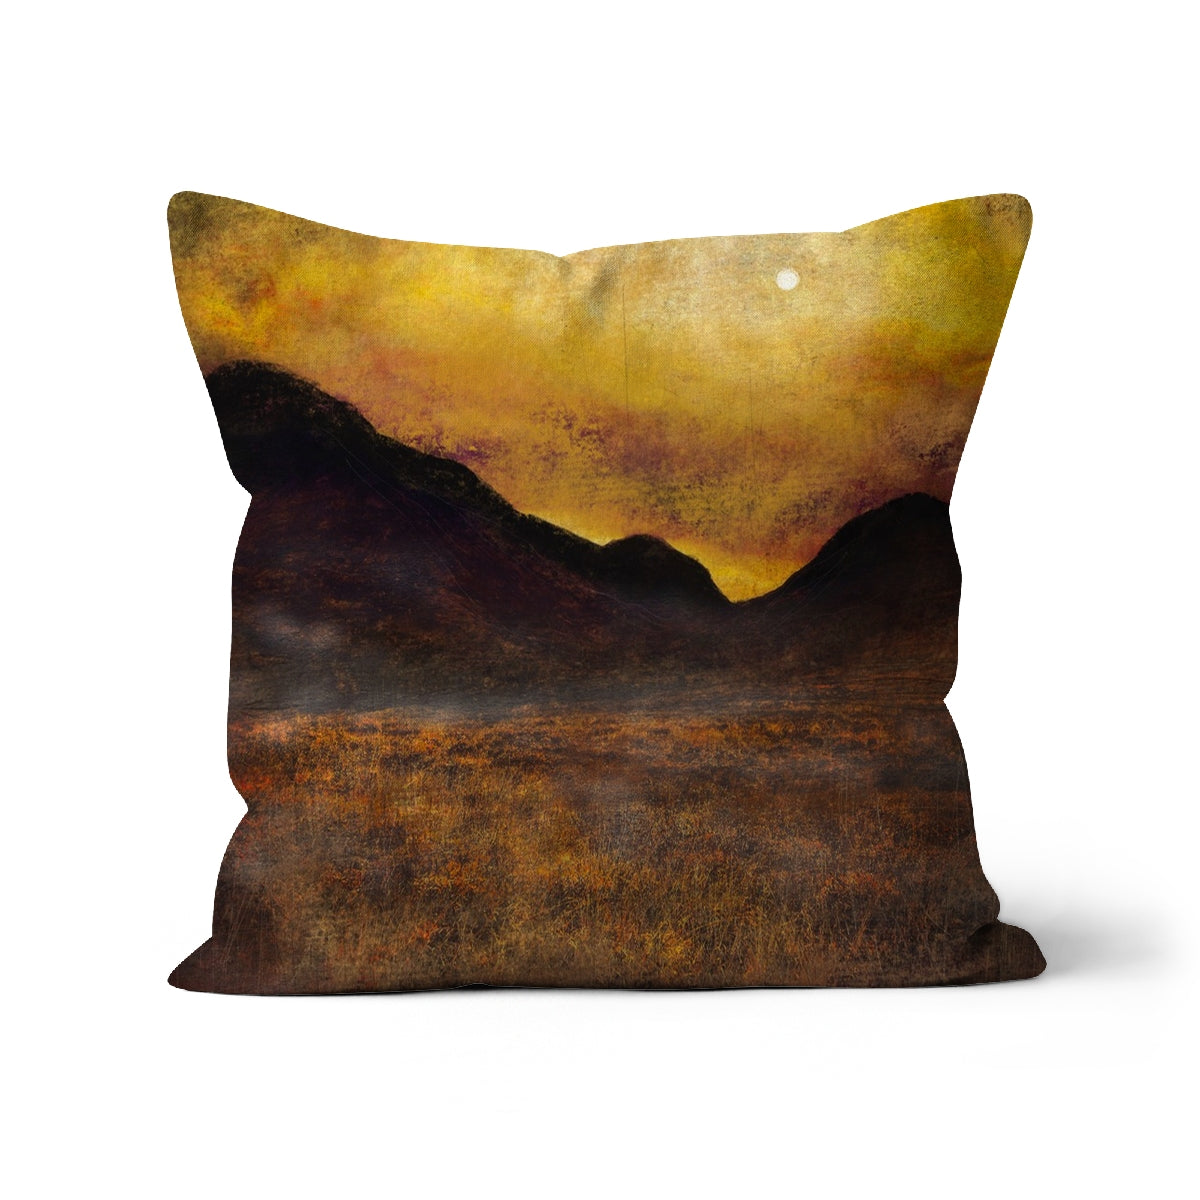 Glencoe Moonlight Art Gifts Cushion-Cushions-Glencoe Art Gallery-Canvas-22"x22"-Paintings, Prints, Homeware, Art Gifts From Scotland By Scottish Artist Kevin Hunter